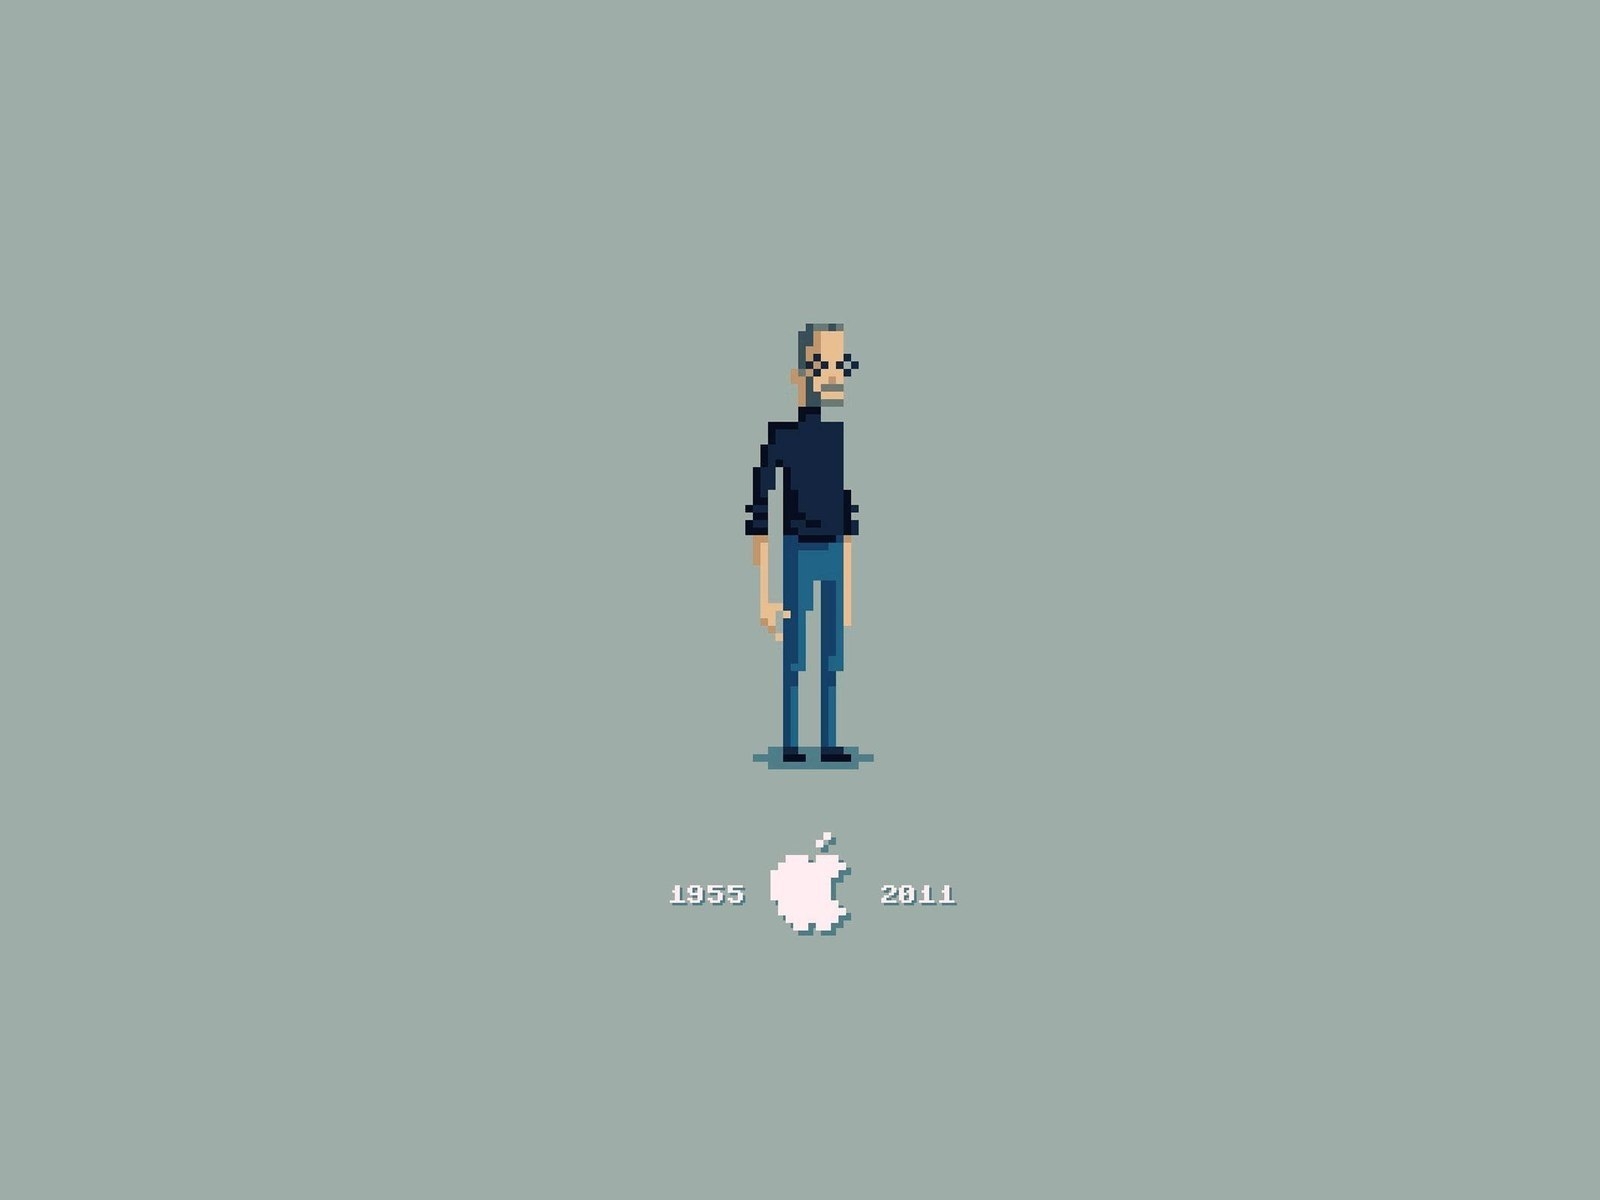 Steve Jobs Pixelated for 1600 x 1200 resolution